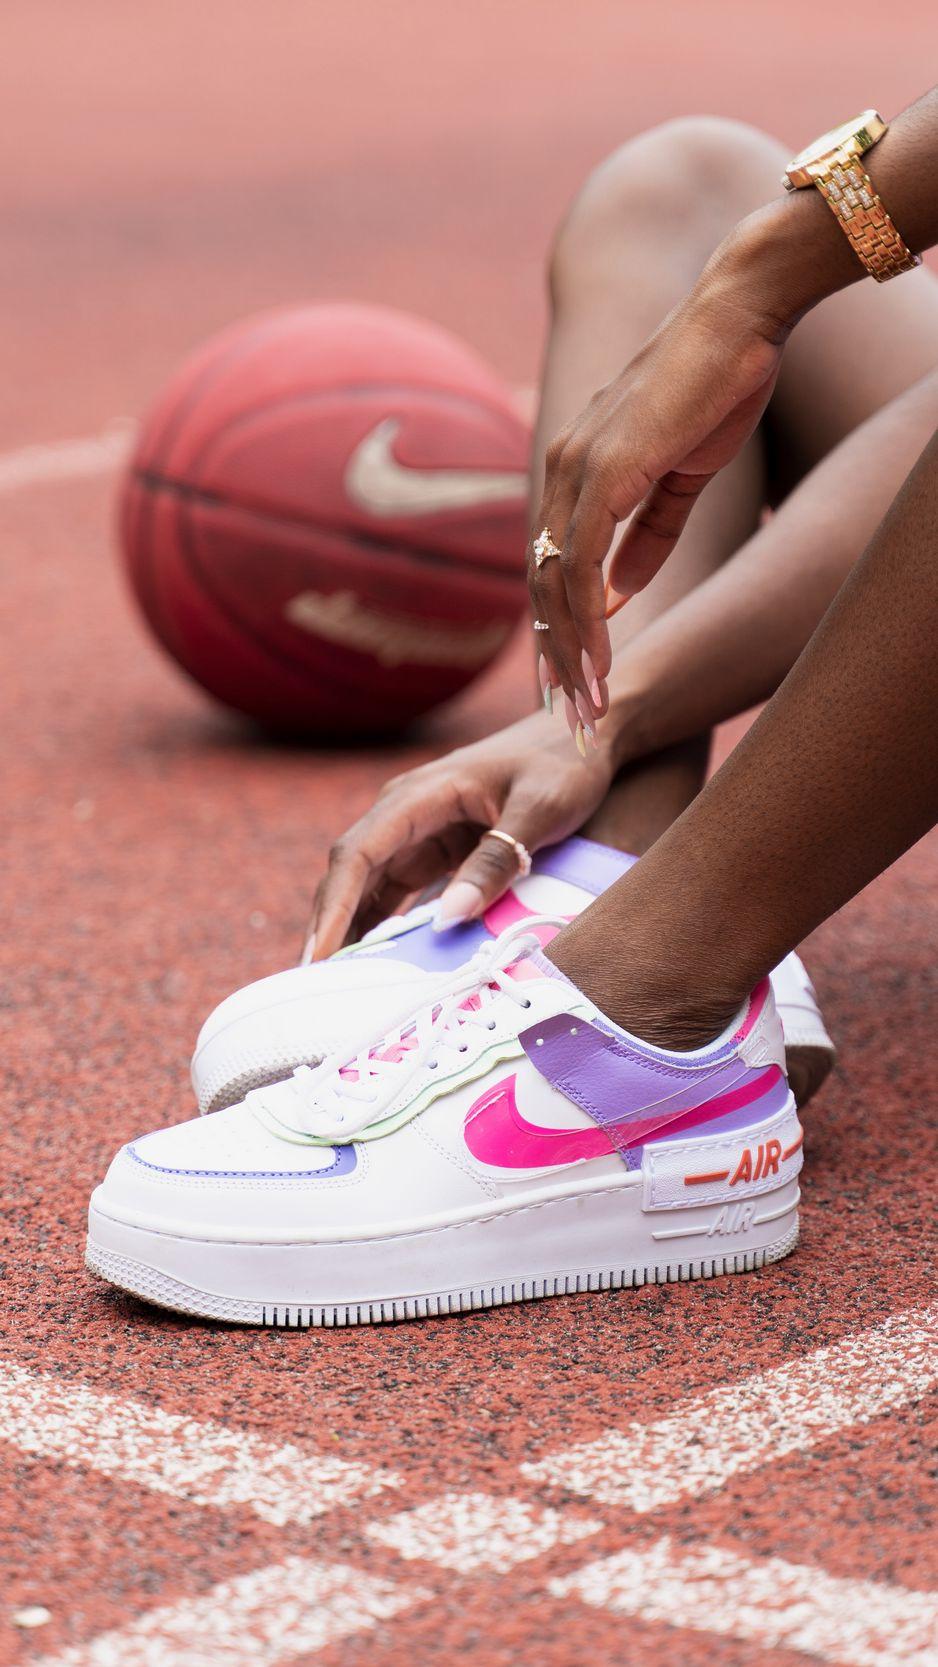 Wallpaper Girl Sneakers Hands Basketball Ball